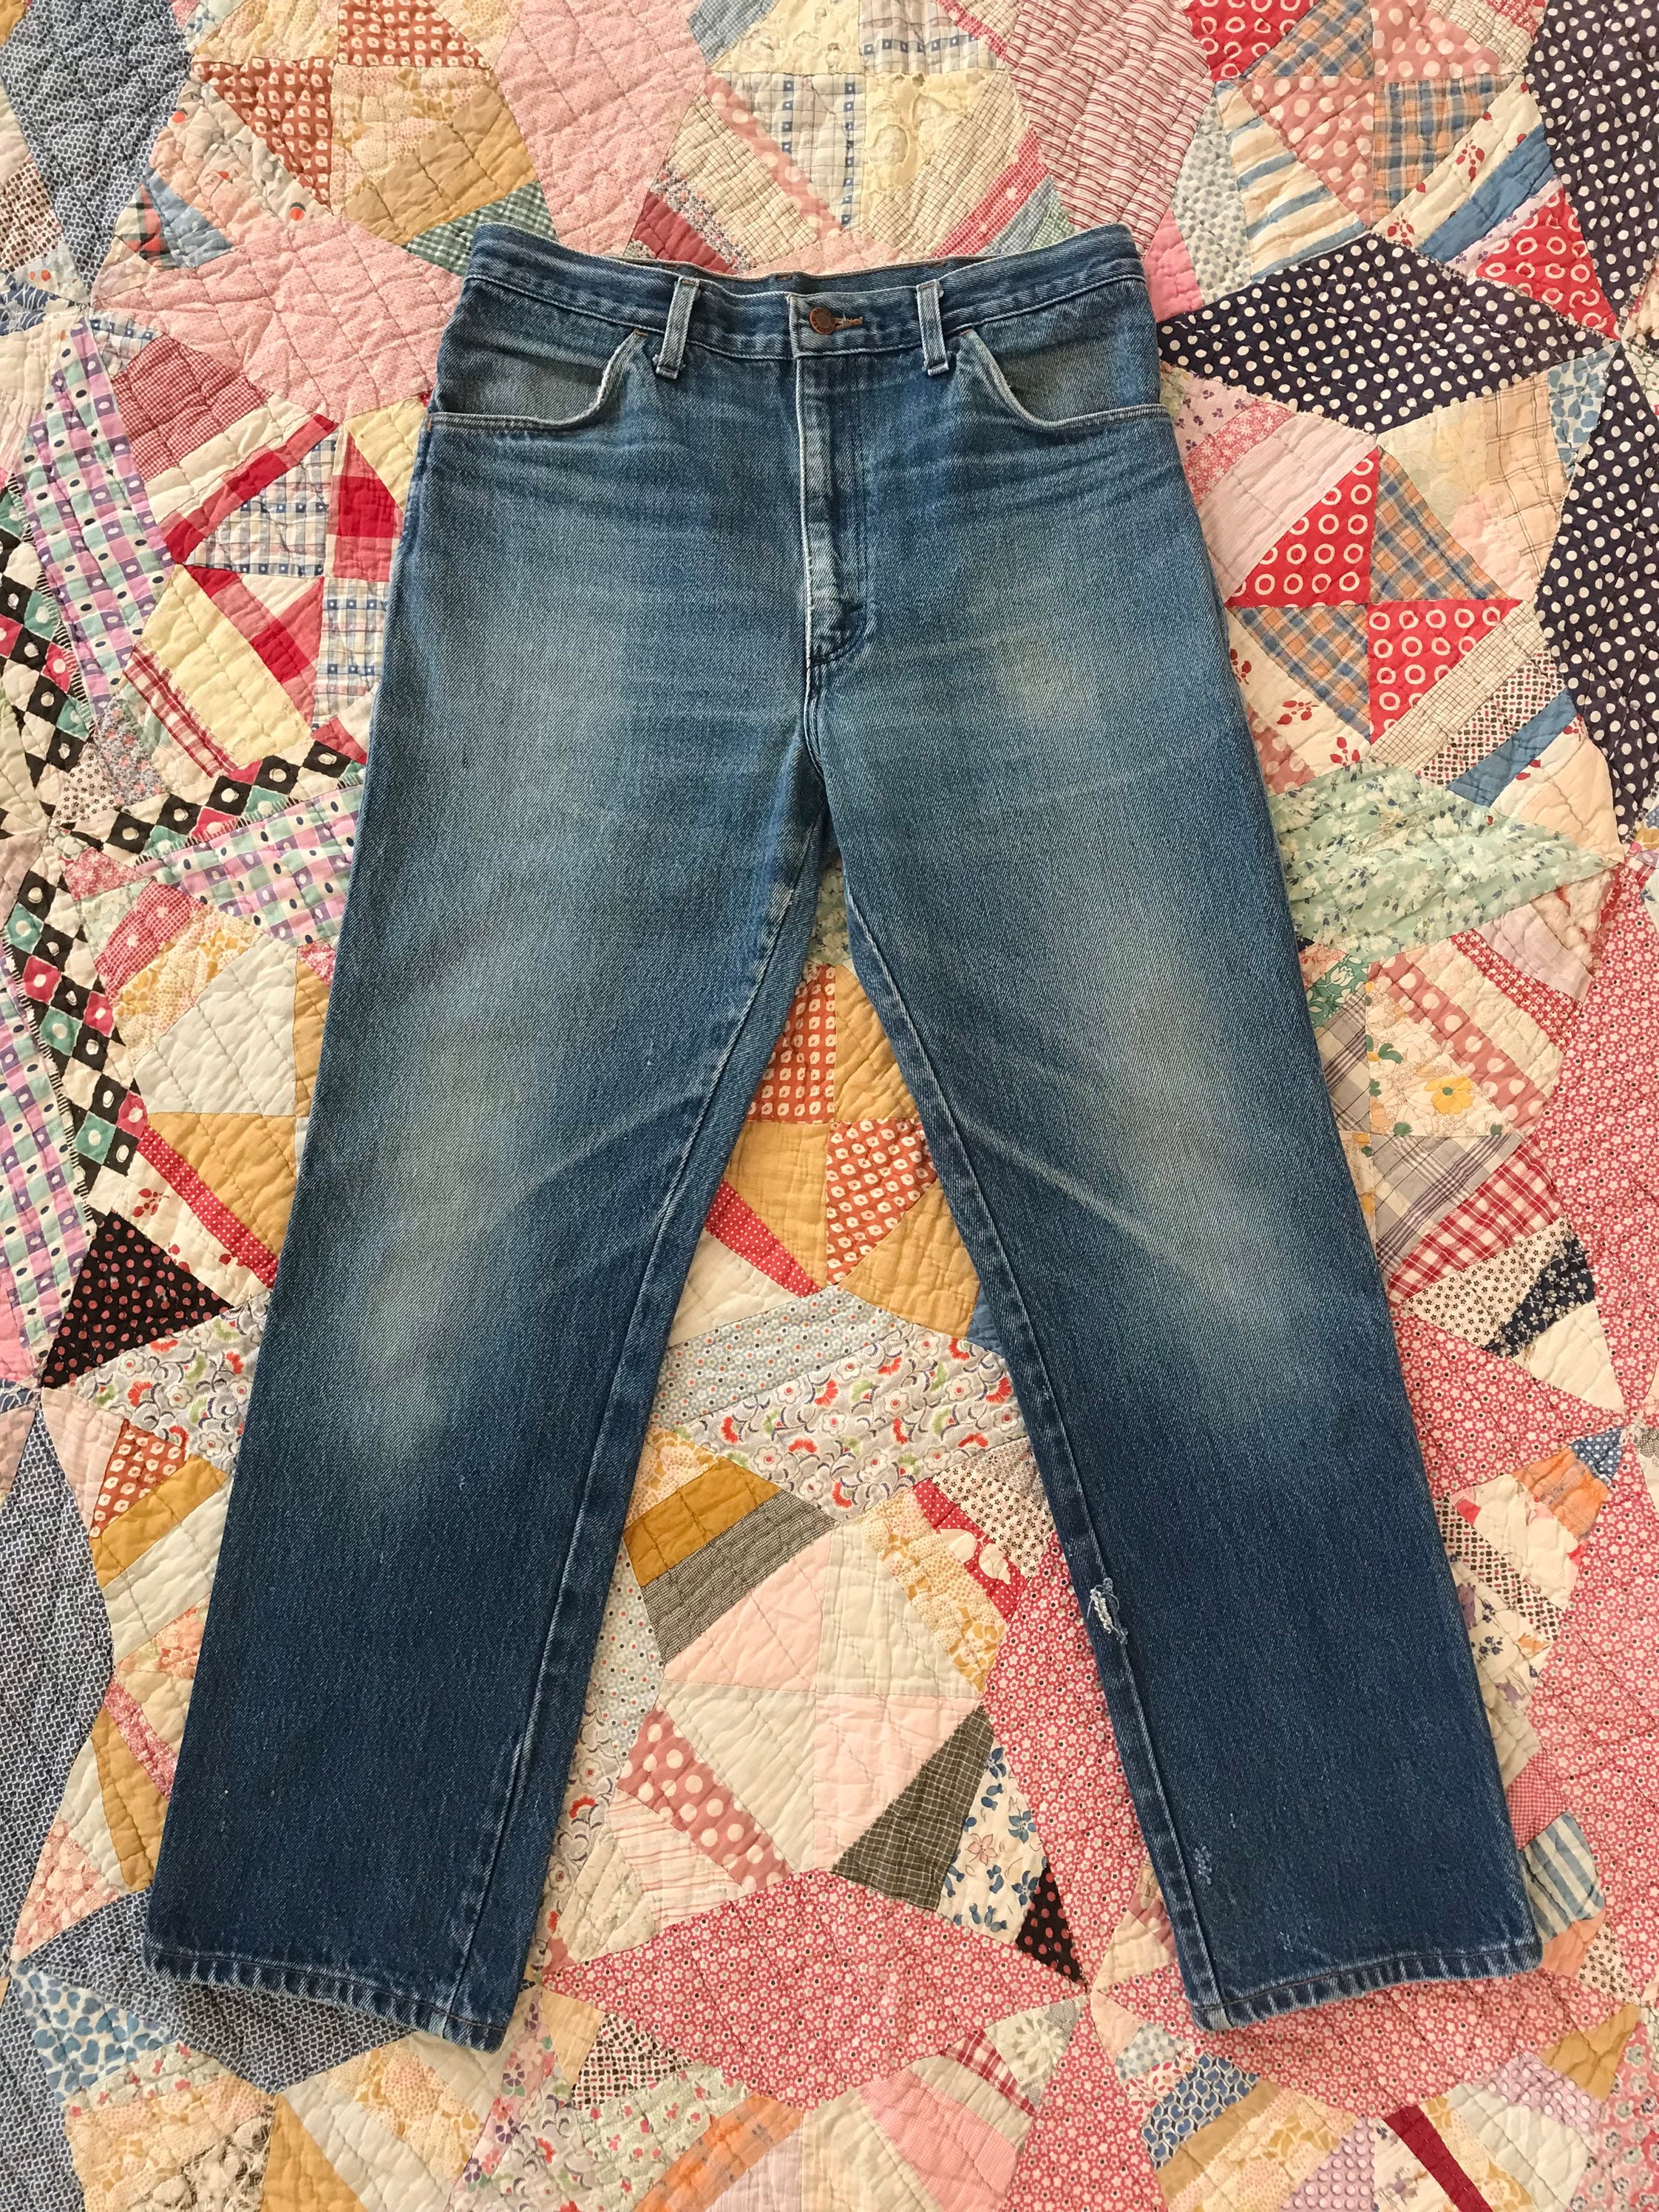 Mid-Wash Rustler Boot-Cut Denim Jeans [34x32] 1970's — Faded Fitment